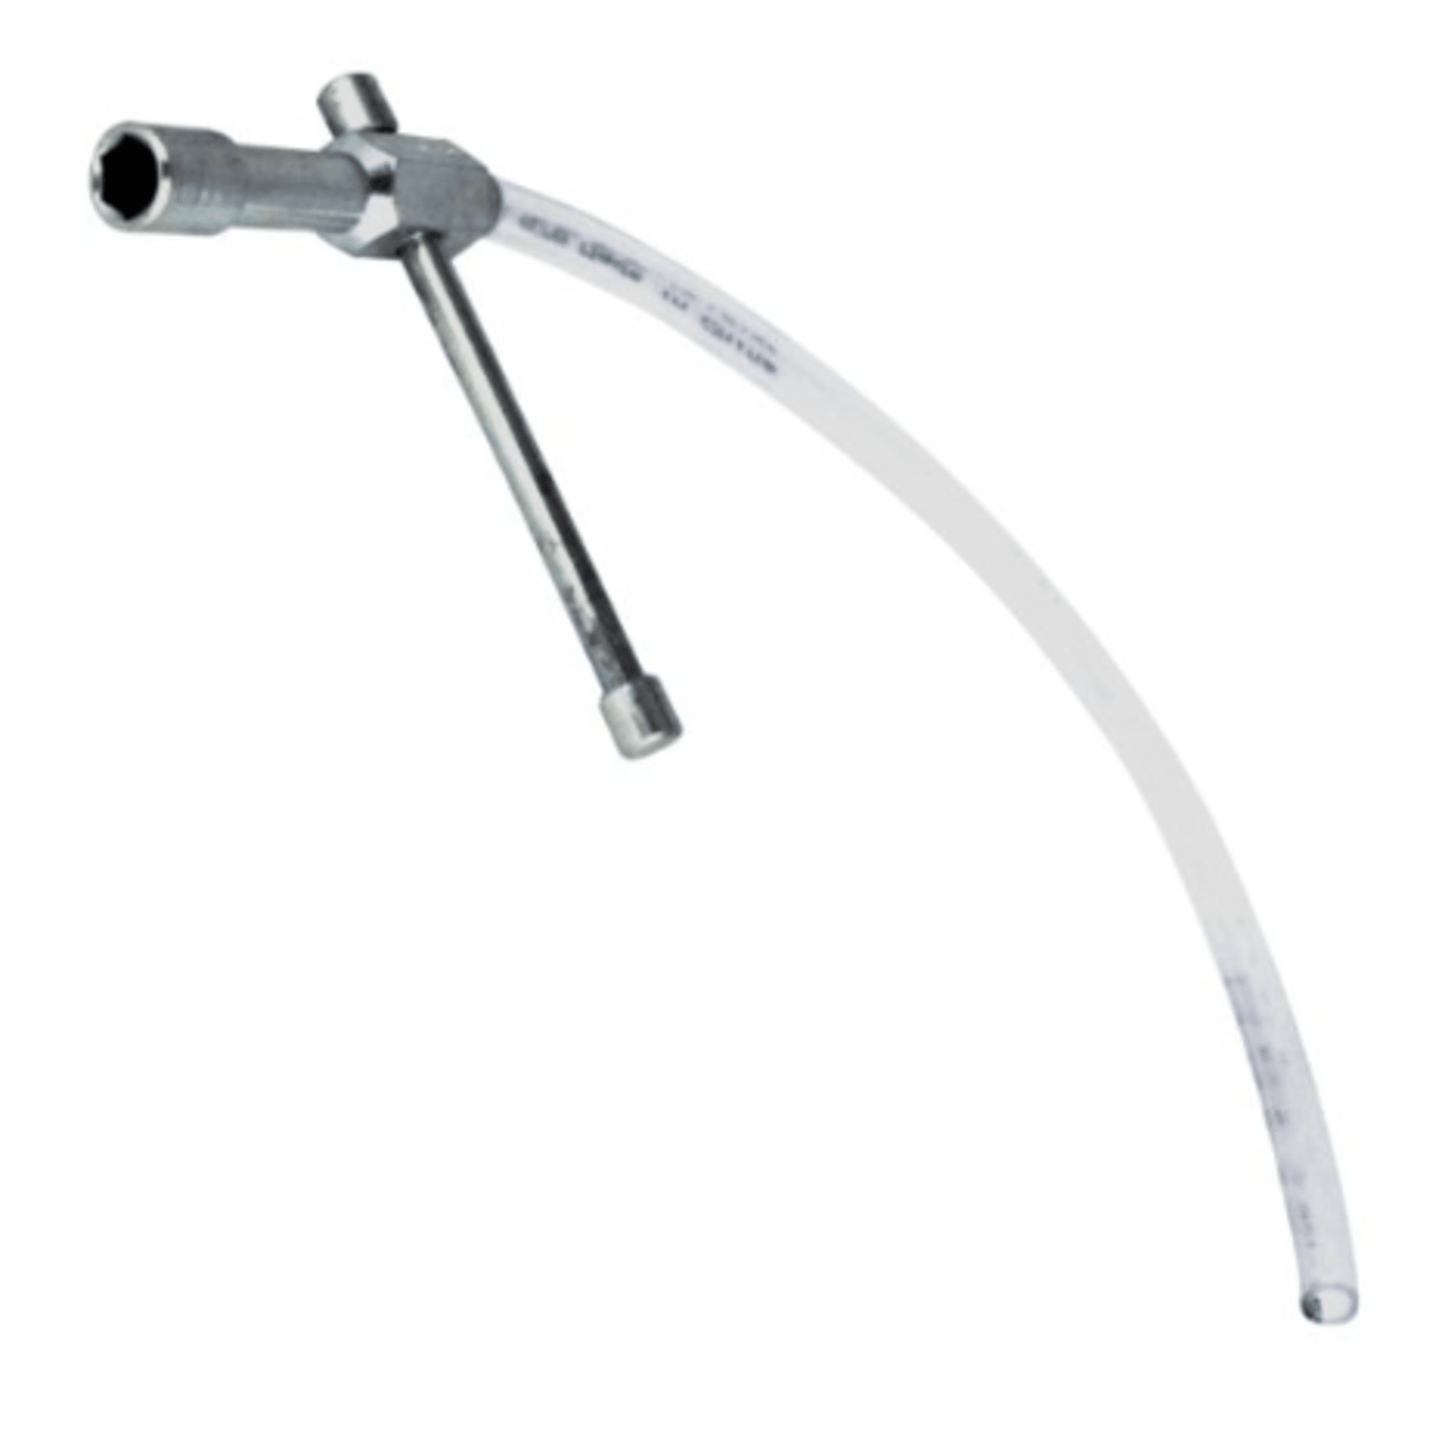 Westwood T28, “FLO-THRU” pump bleed wrench, sliding handle